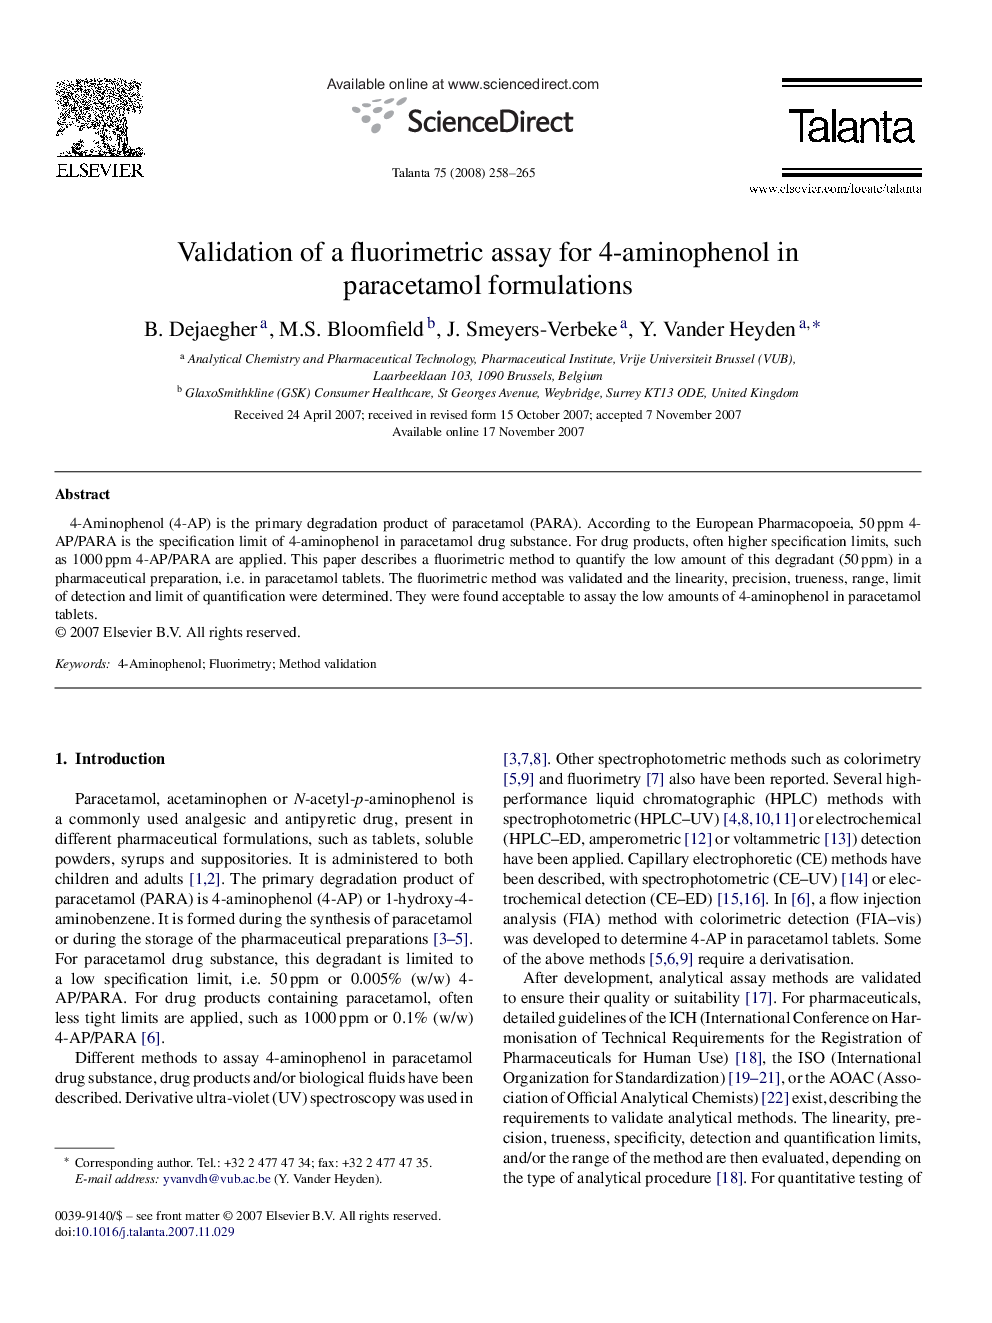 Validation of a fluorimetric assay for 4-aminophenol in paracetamol formulations